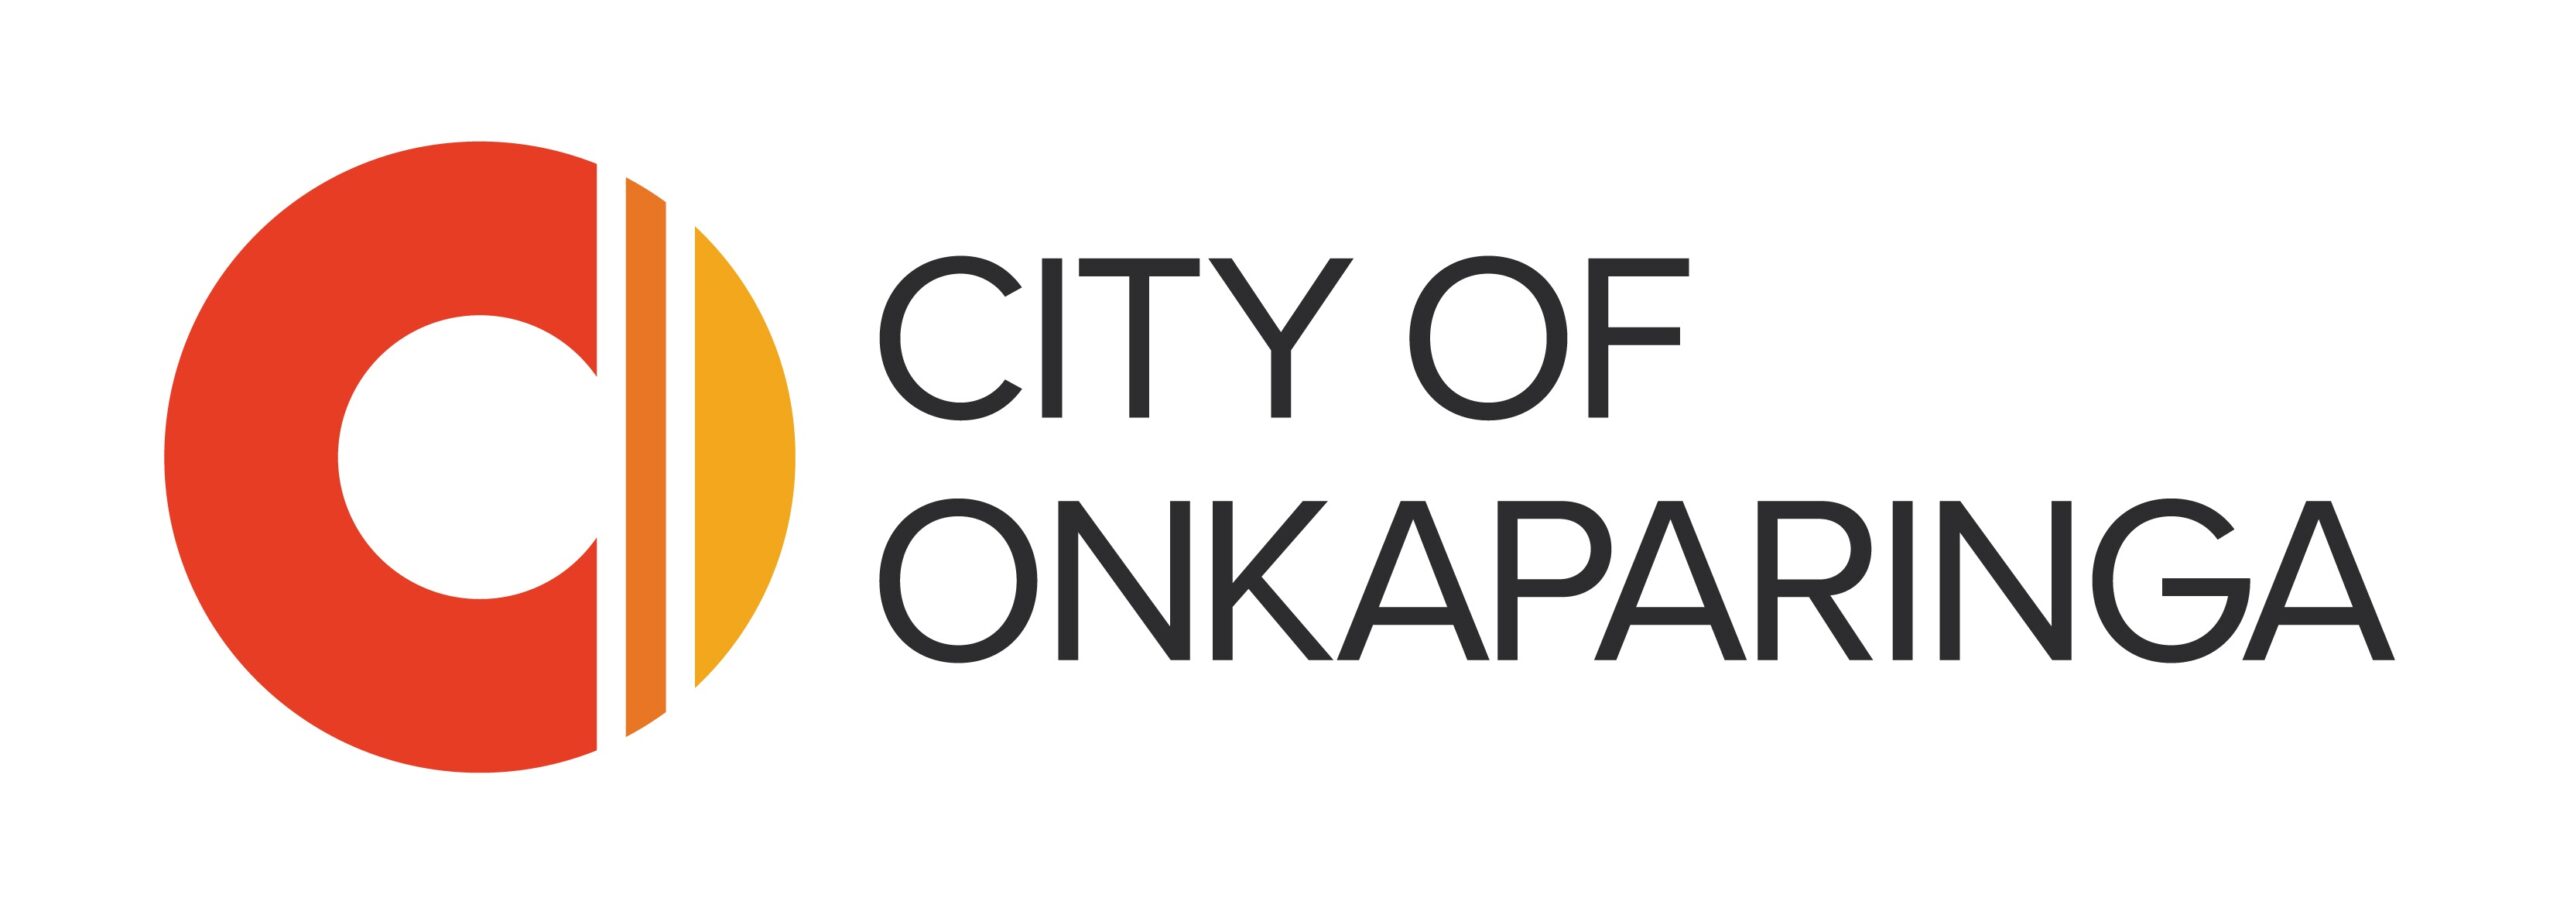 City of Onkaparinga Council logo